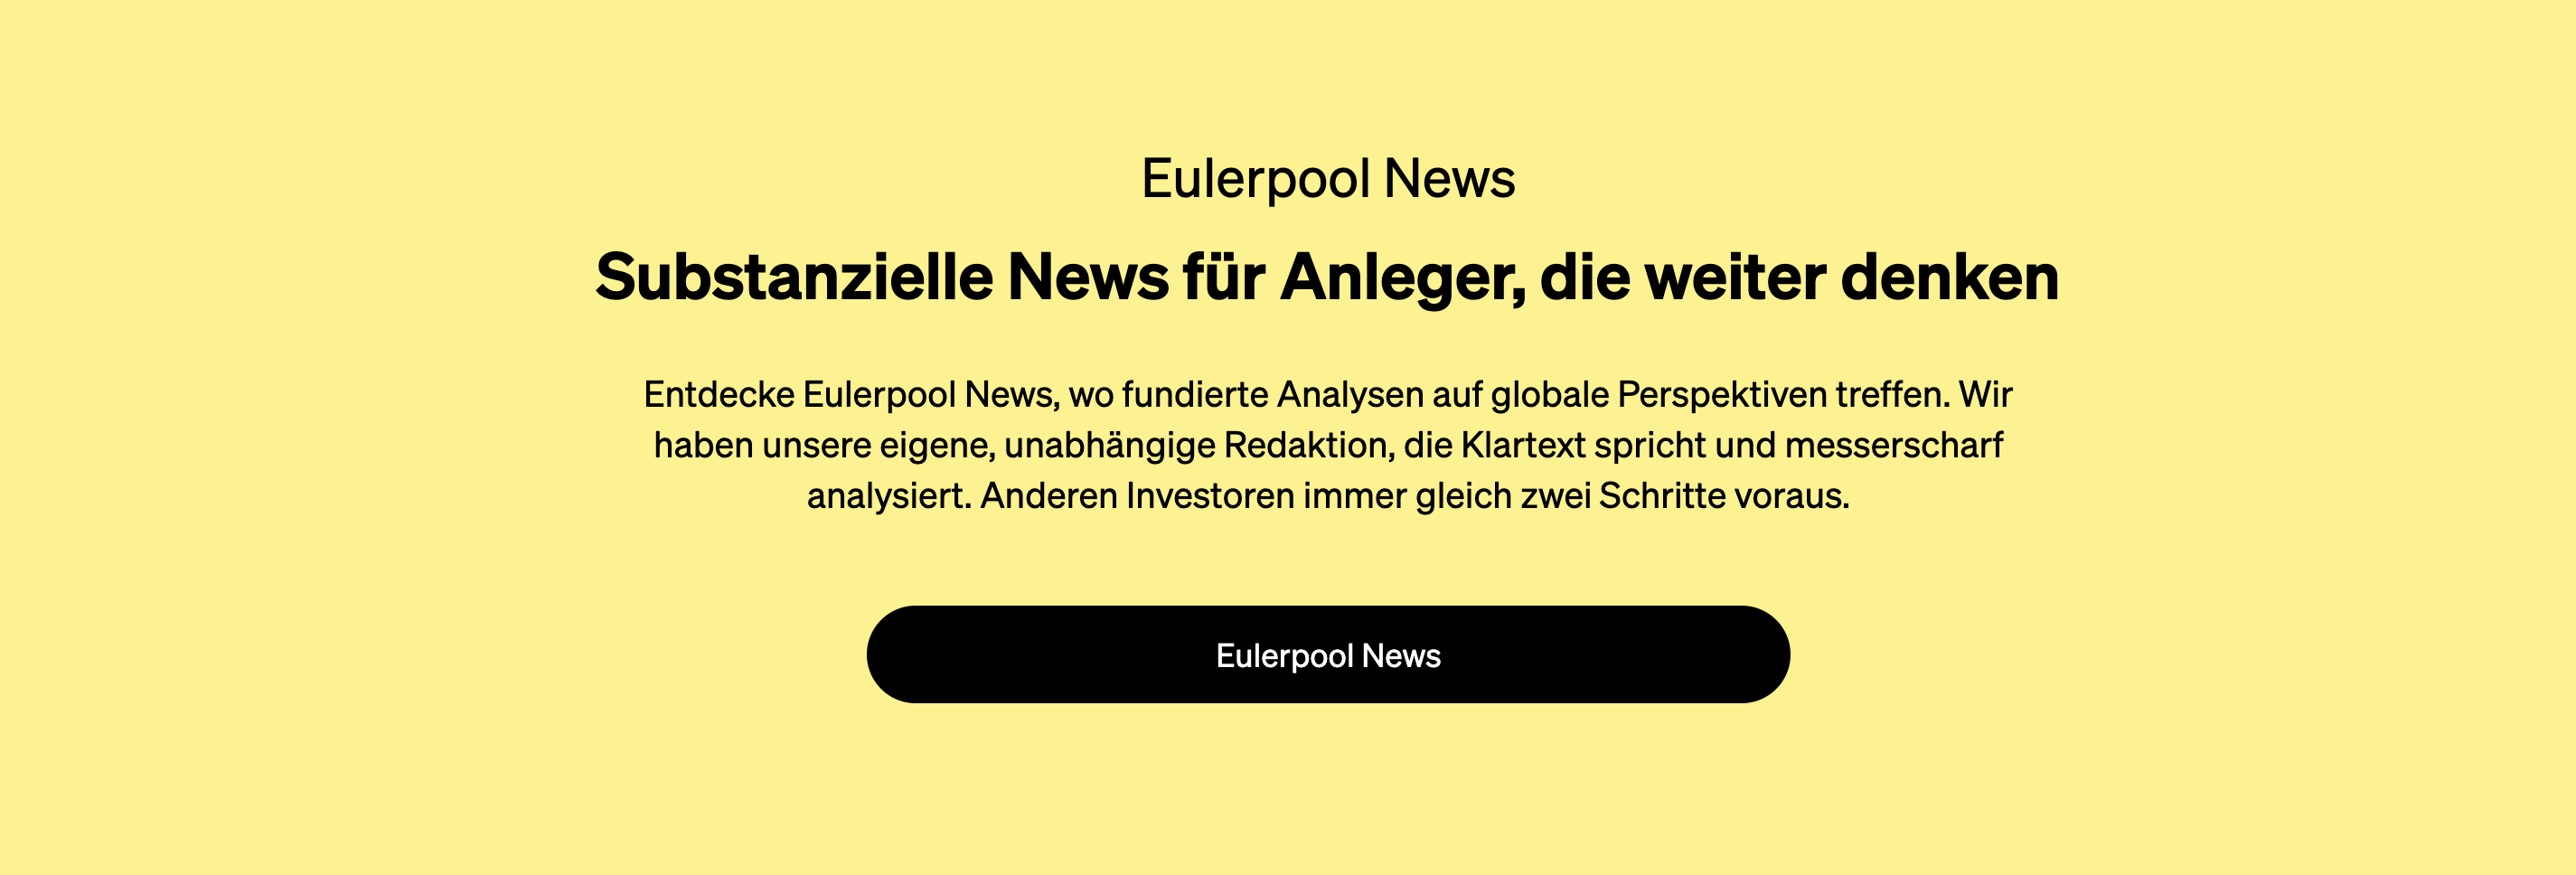 Eulerpool News
